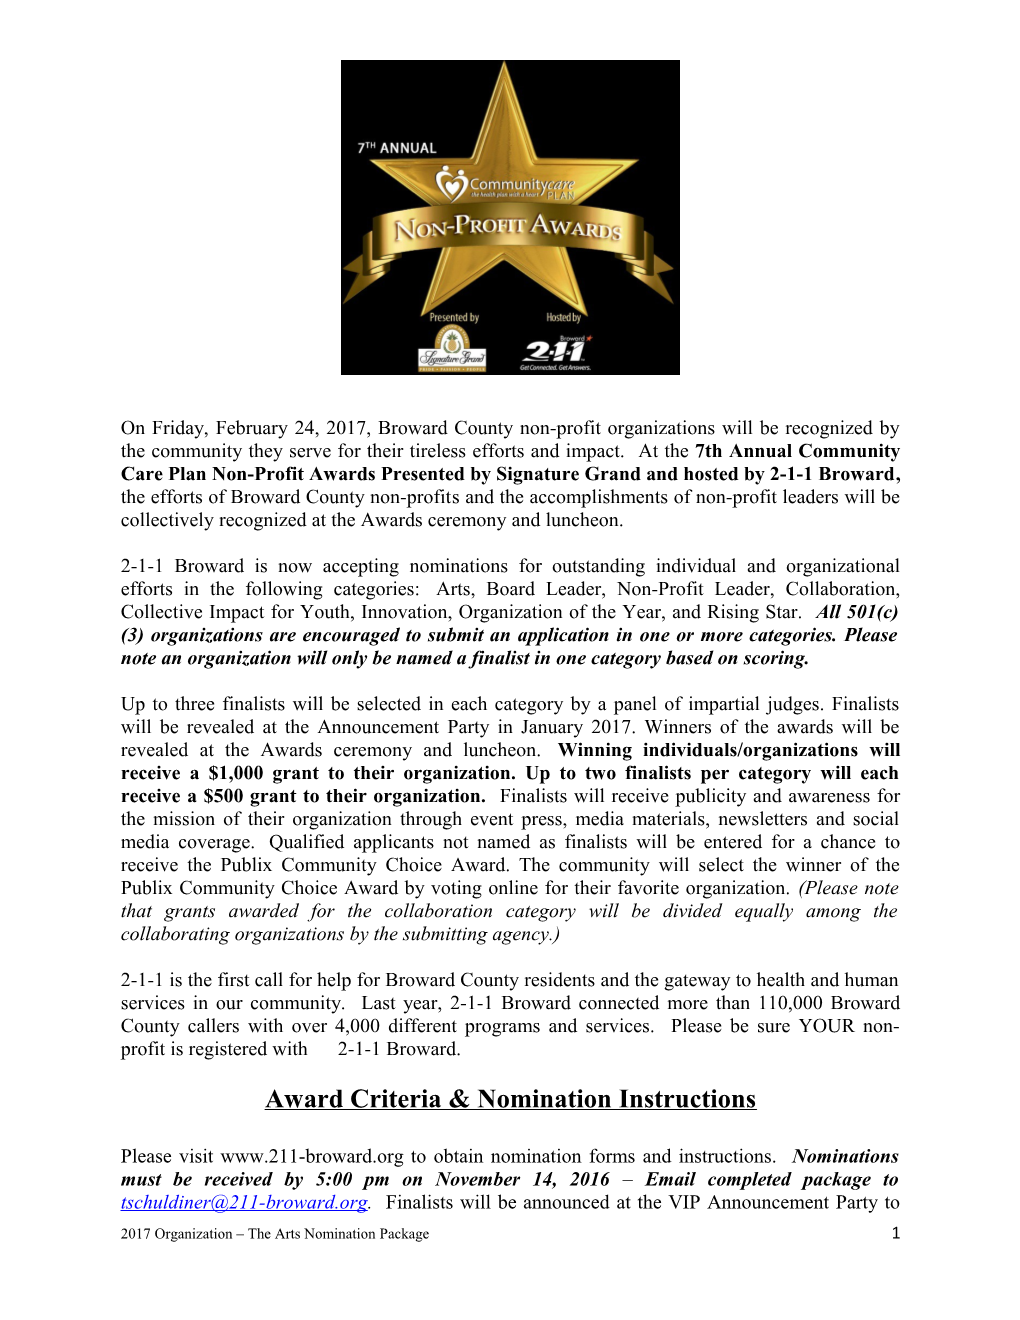 Award Criteria & Nomination Instructions